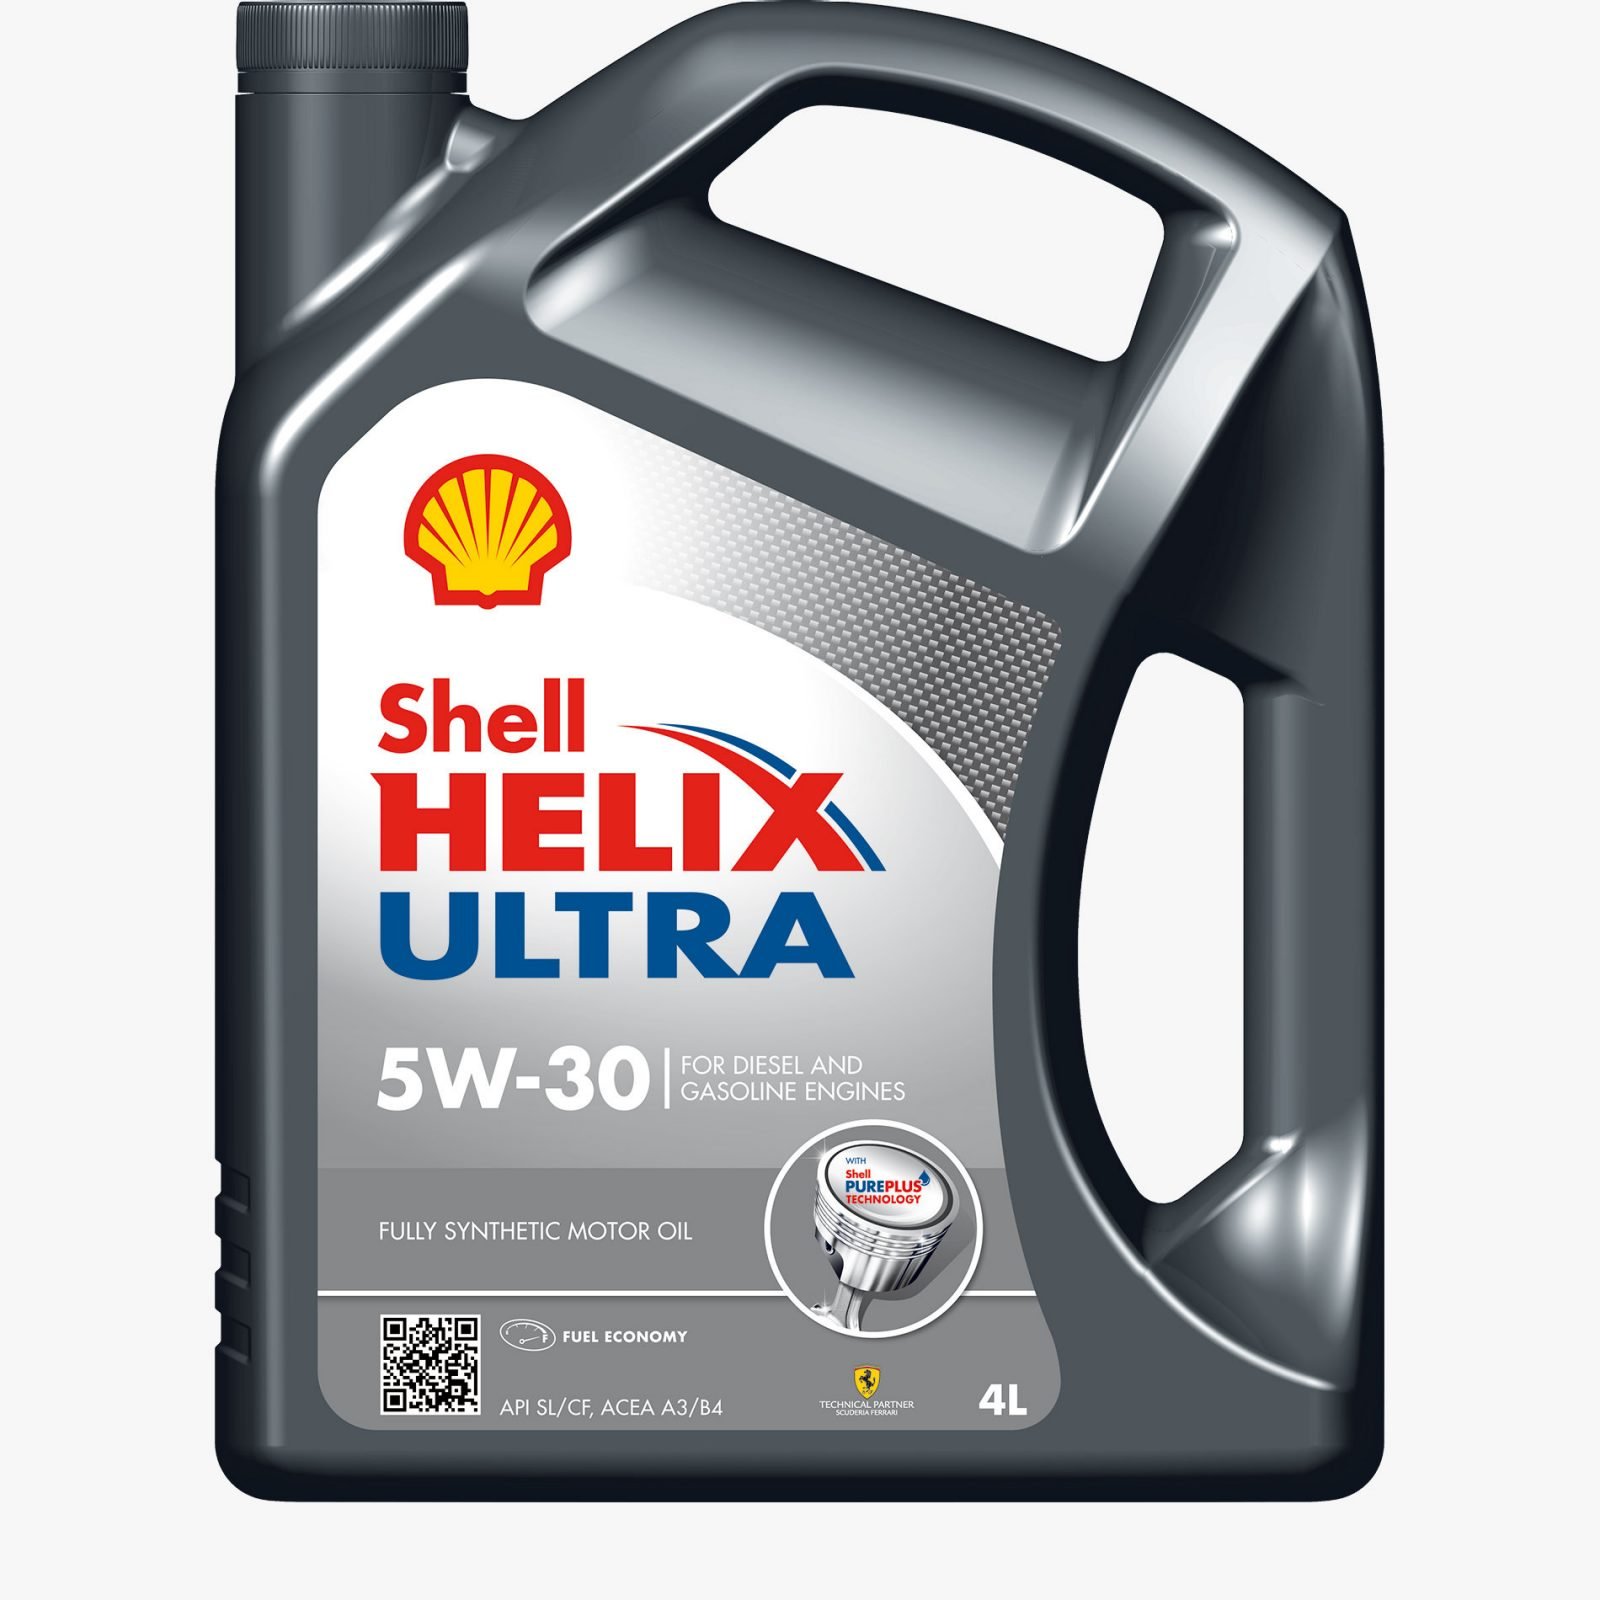 Motoröl Shell Helix Ultra 5W-30, 4L Shell HELIX ULTRA 5W-30 4L